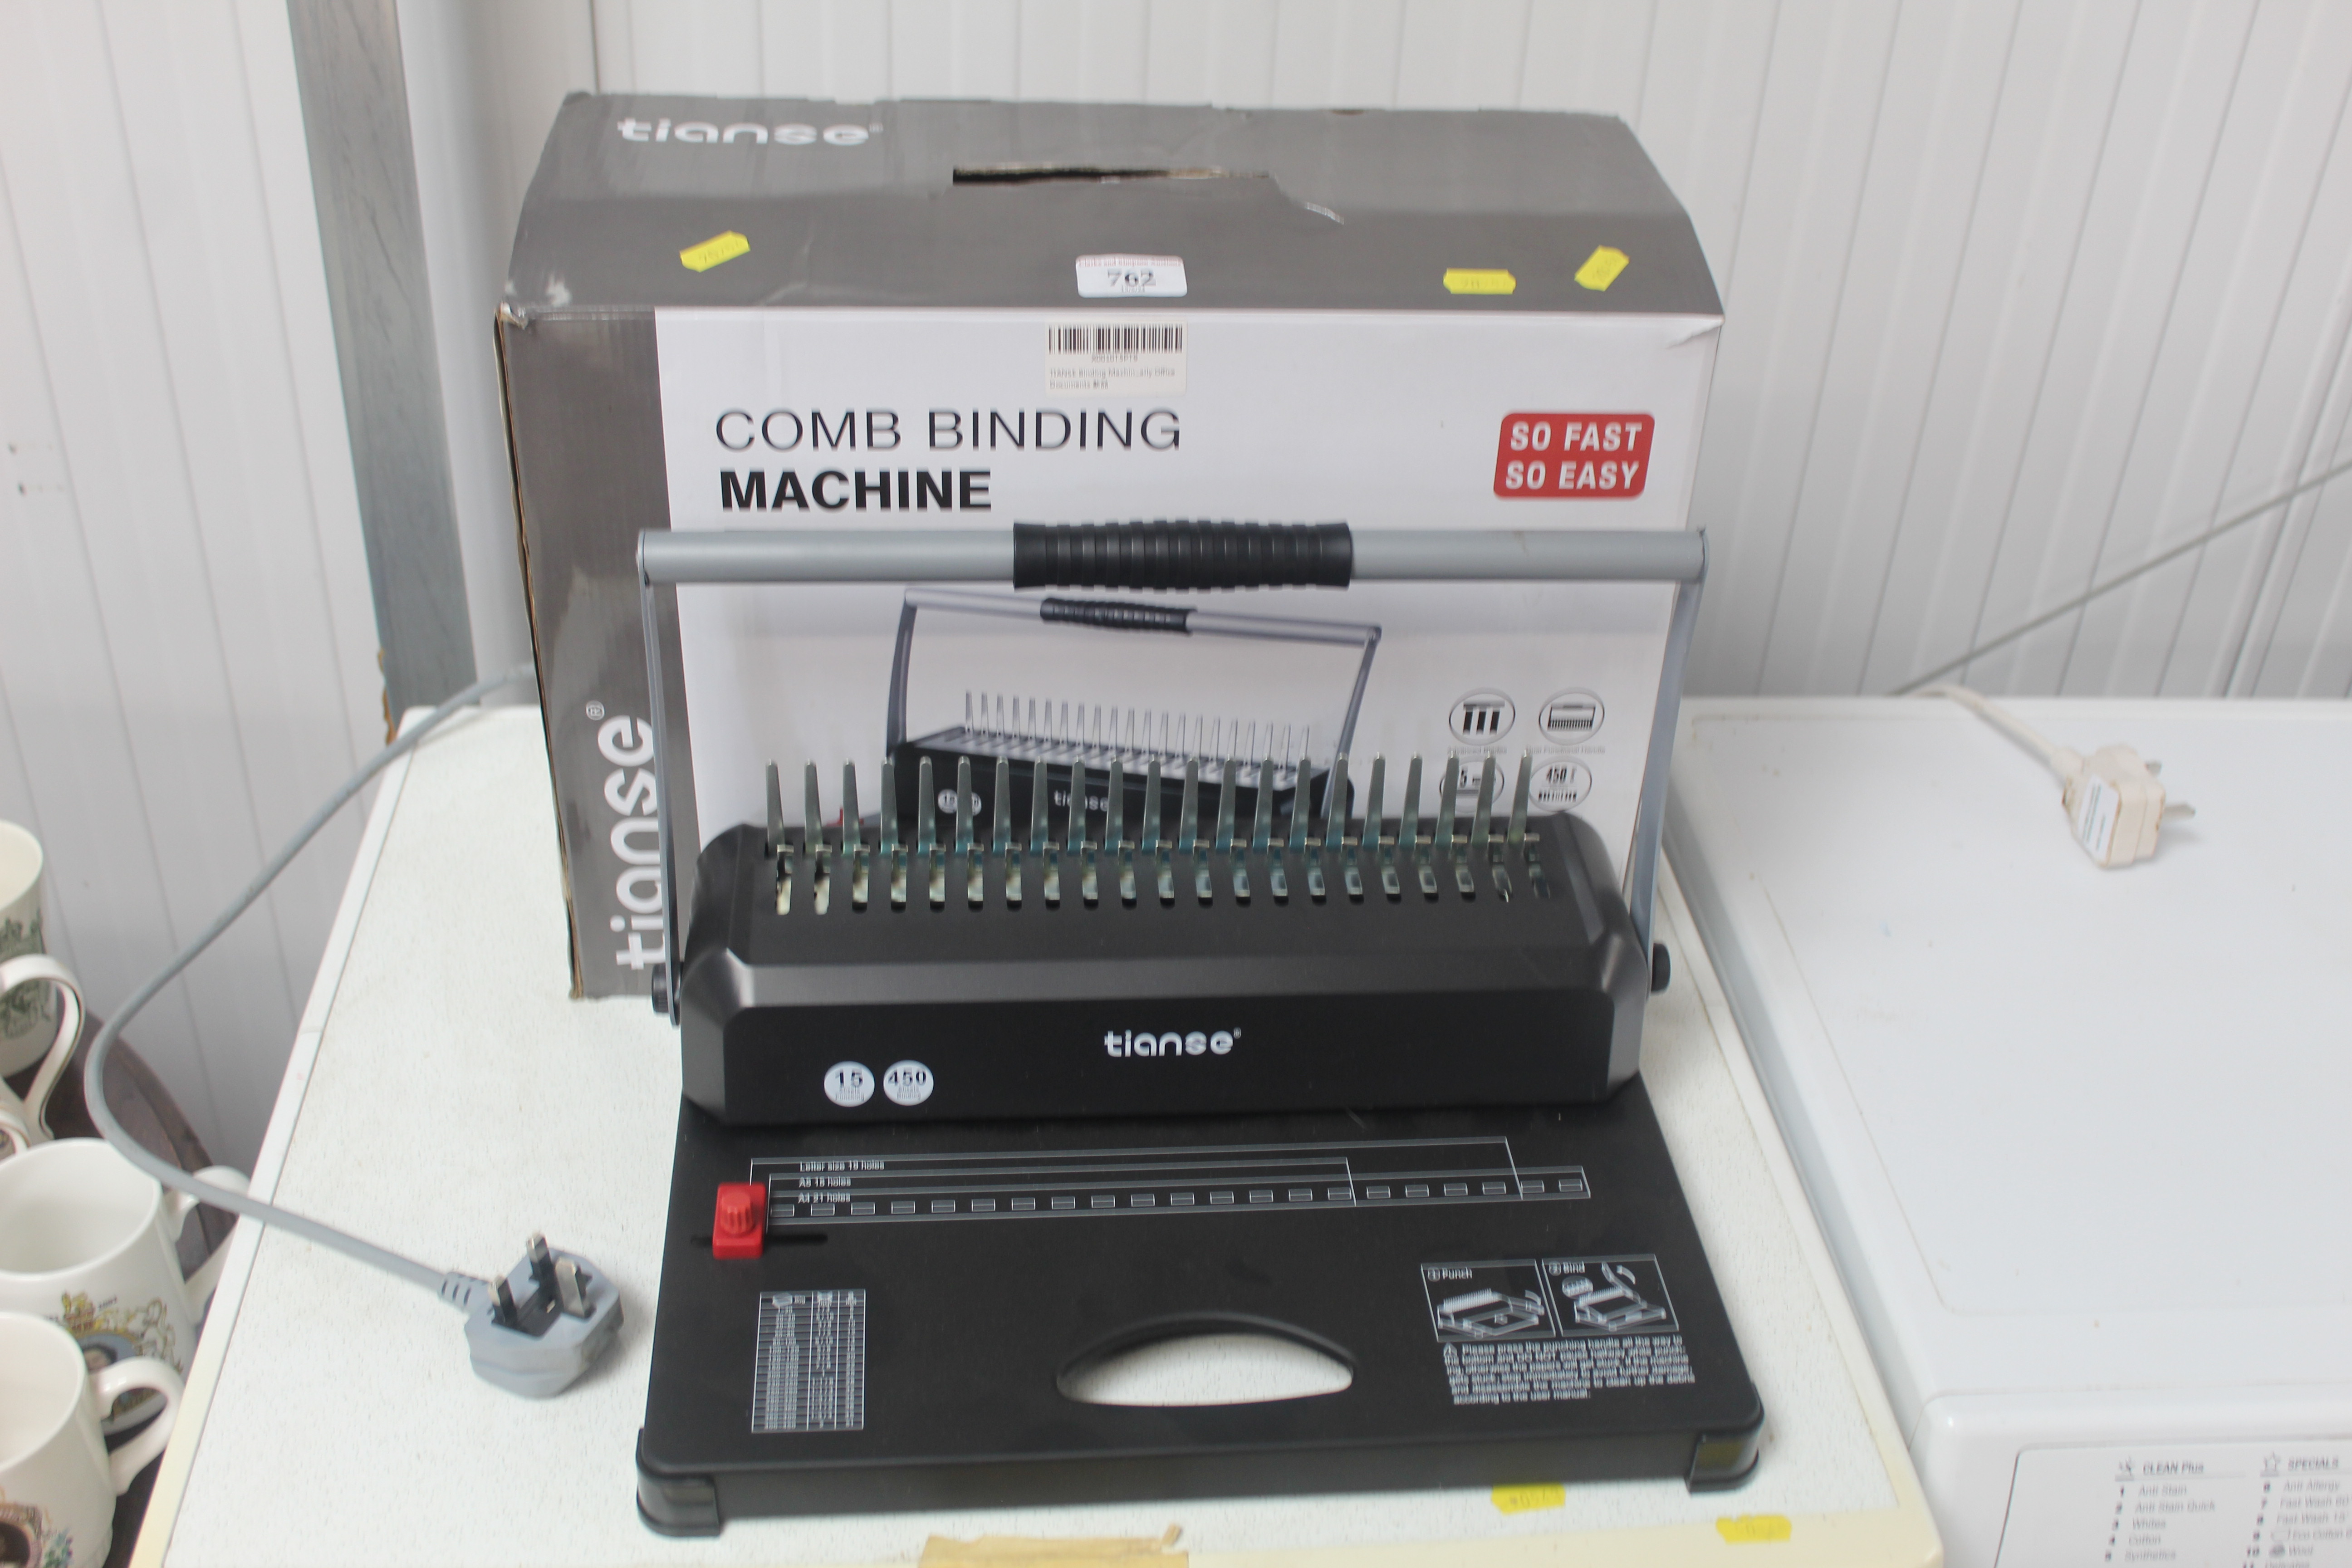 A comb binding machine